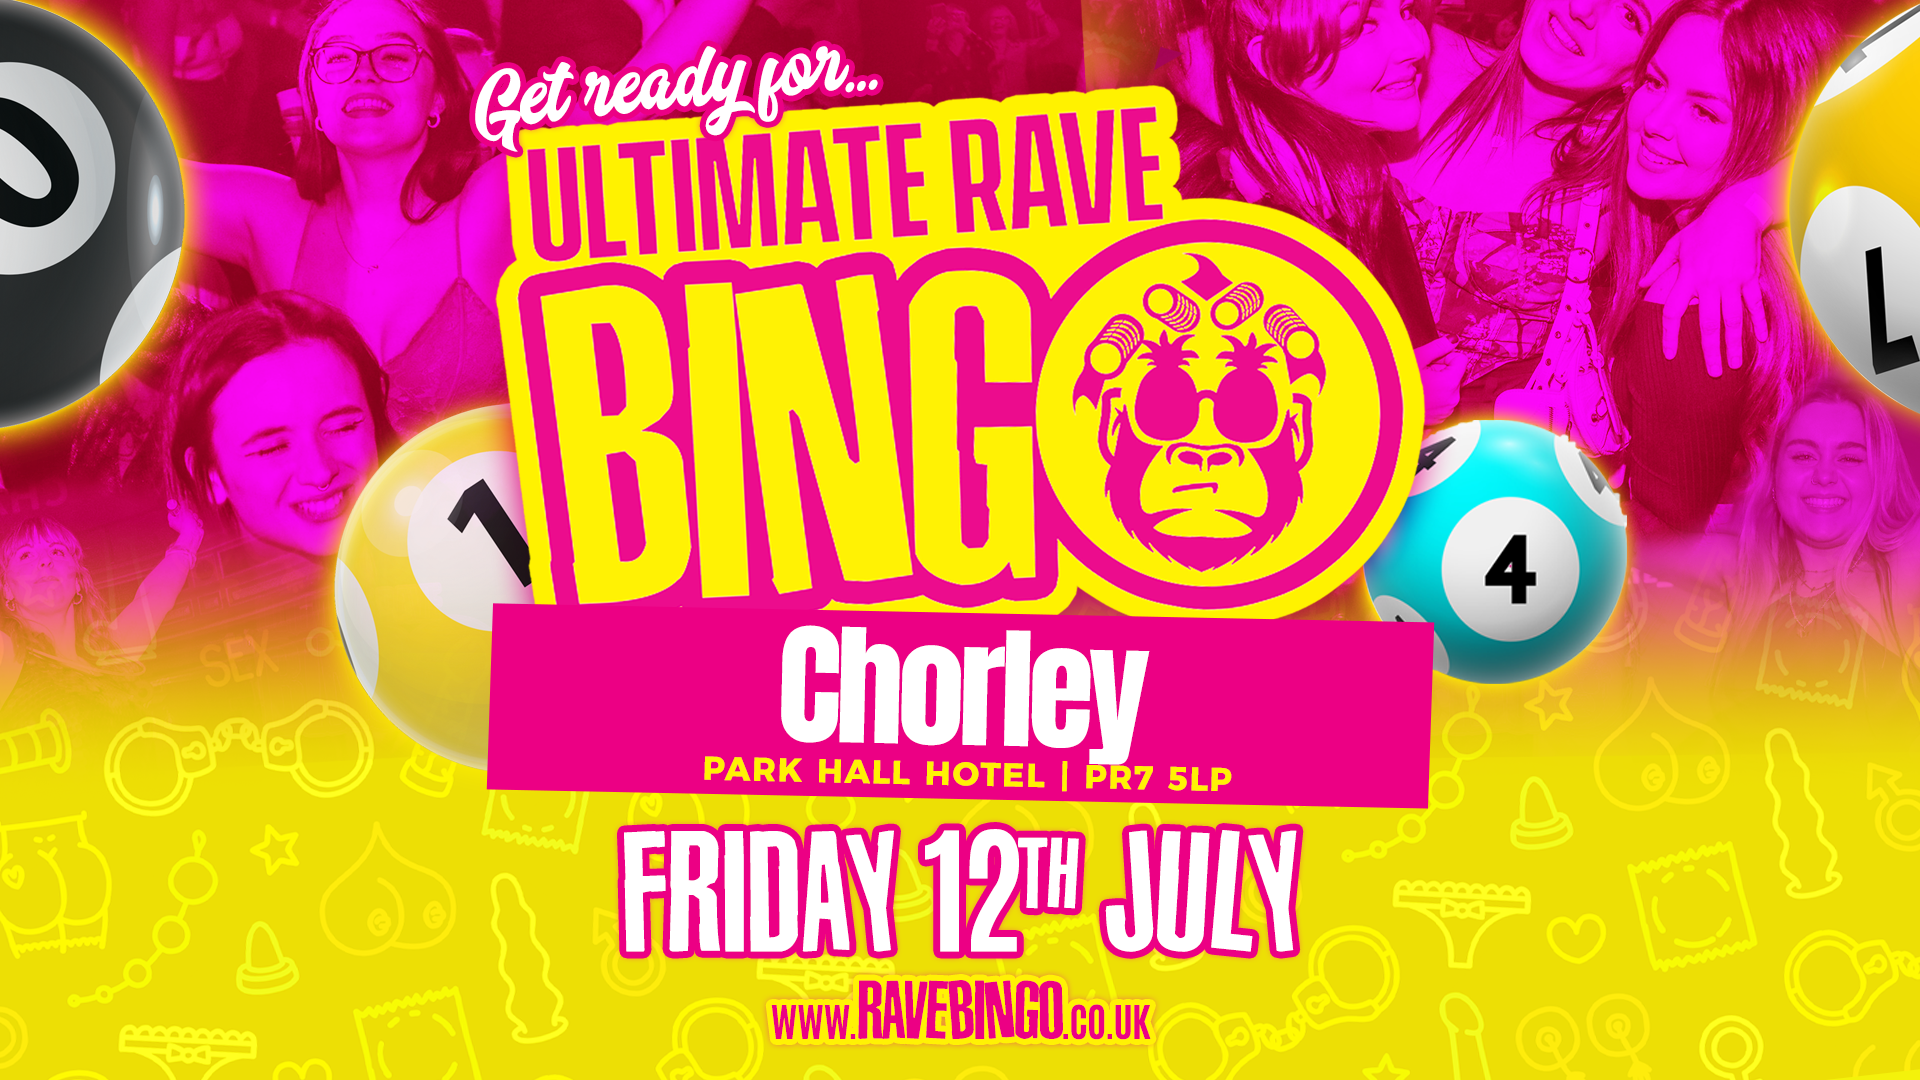 Ultimate Rave Bingo // Chorley // Friday 12th July